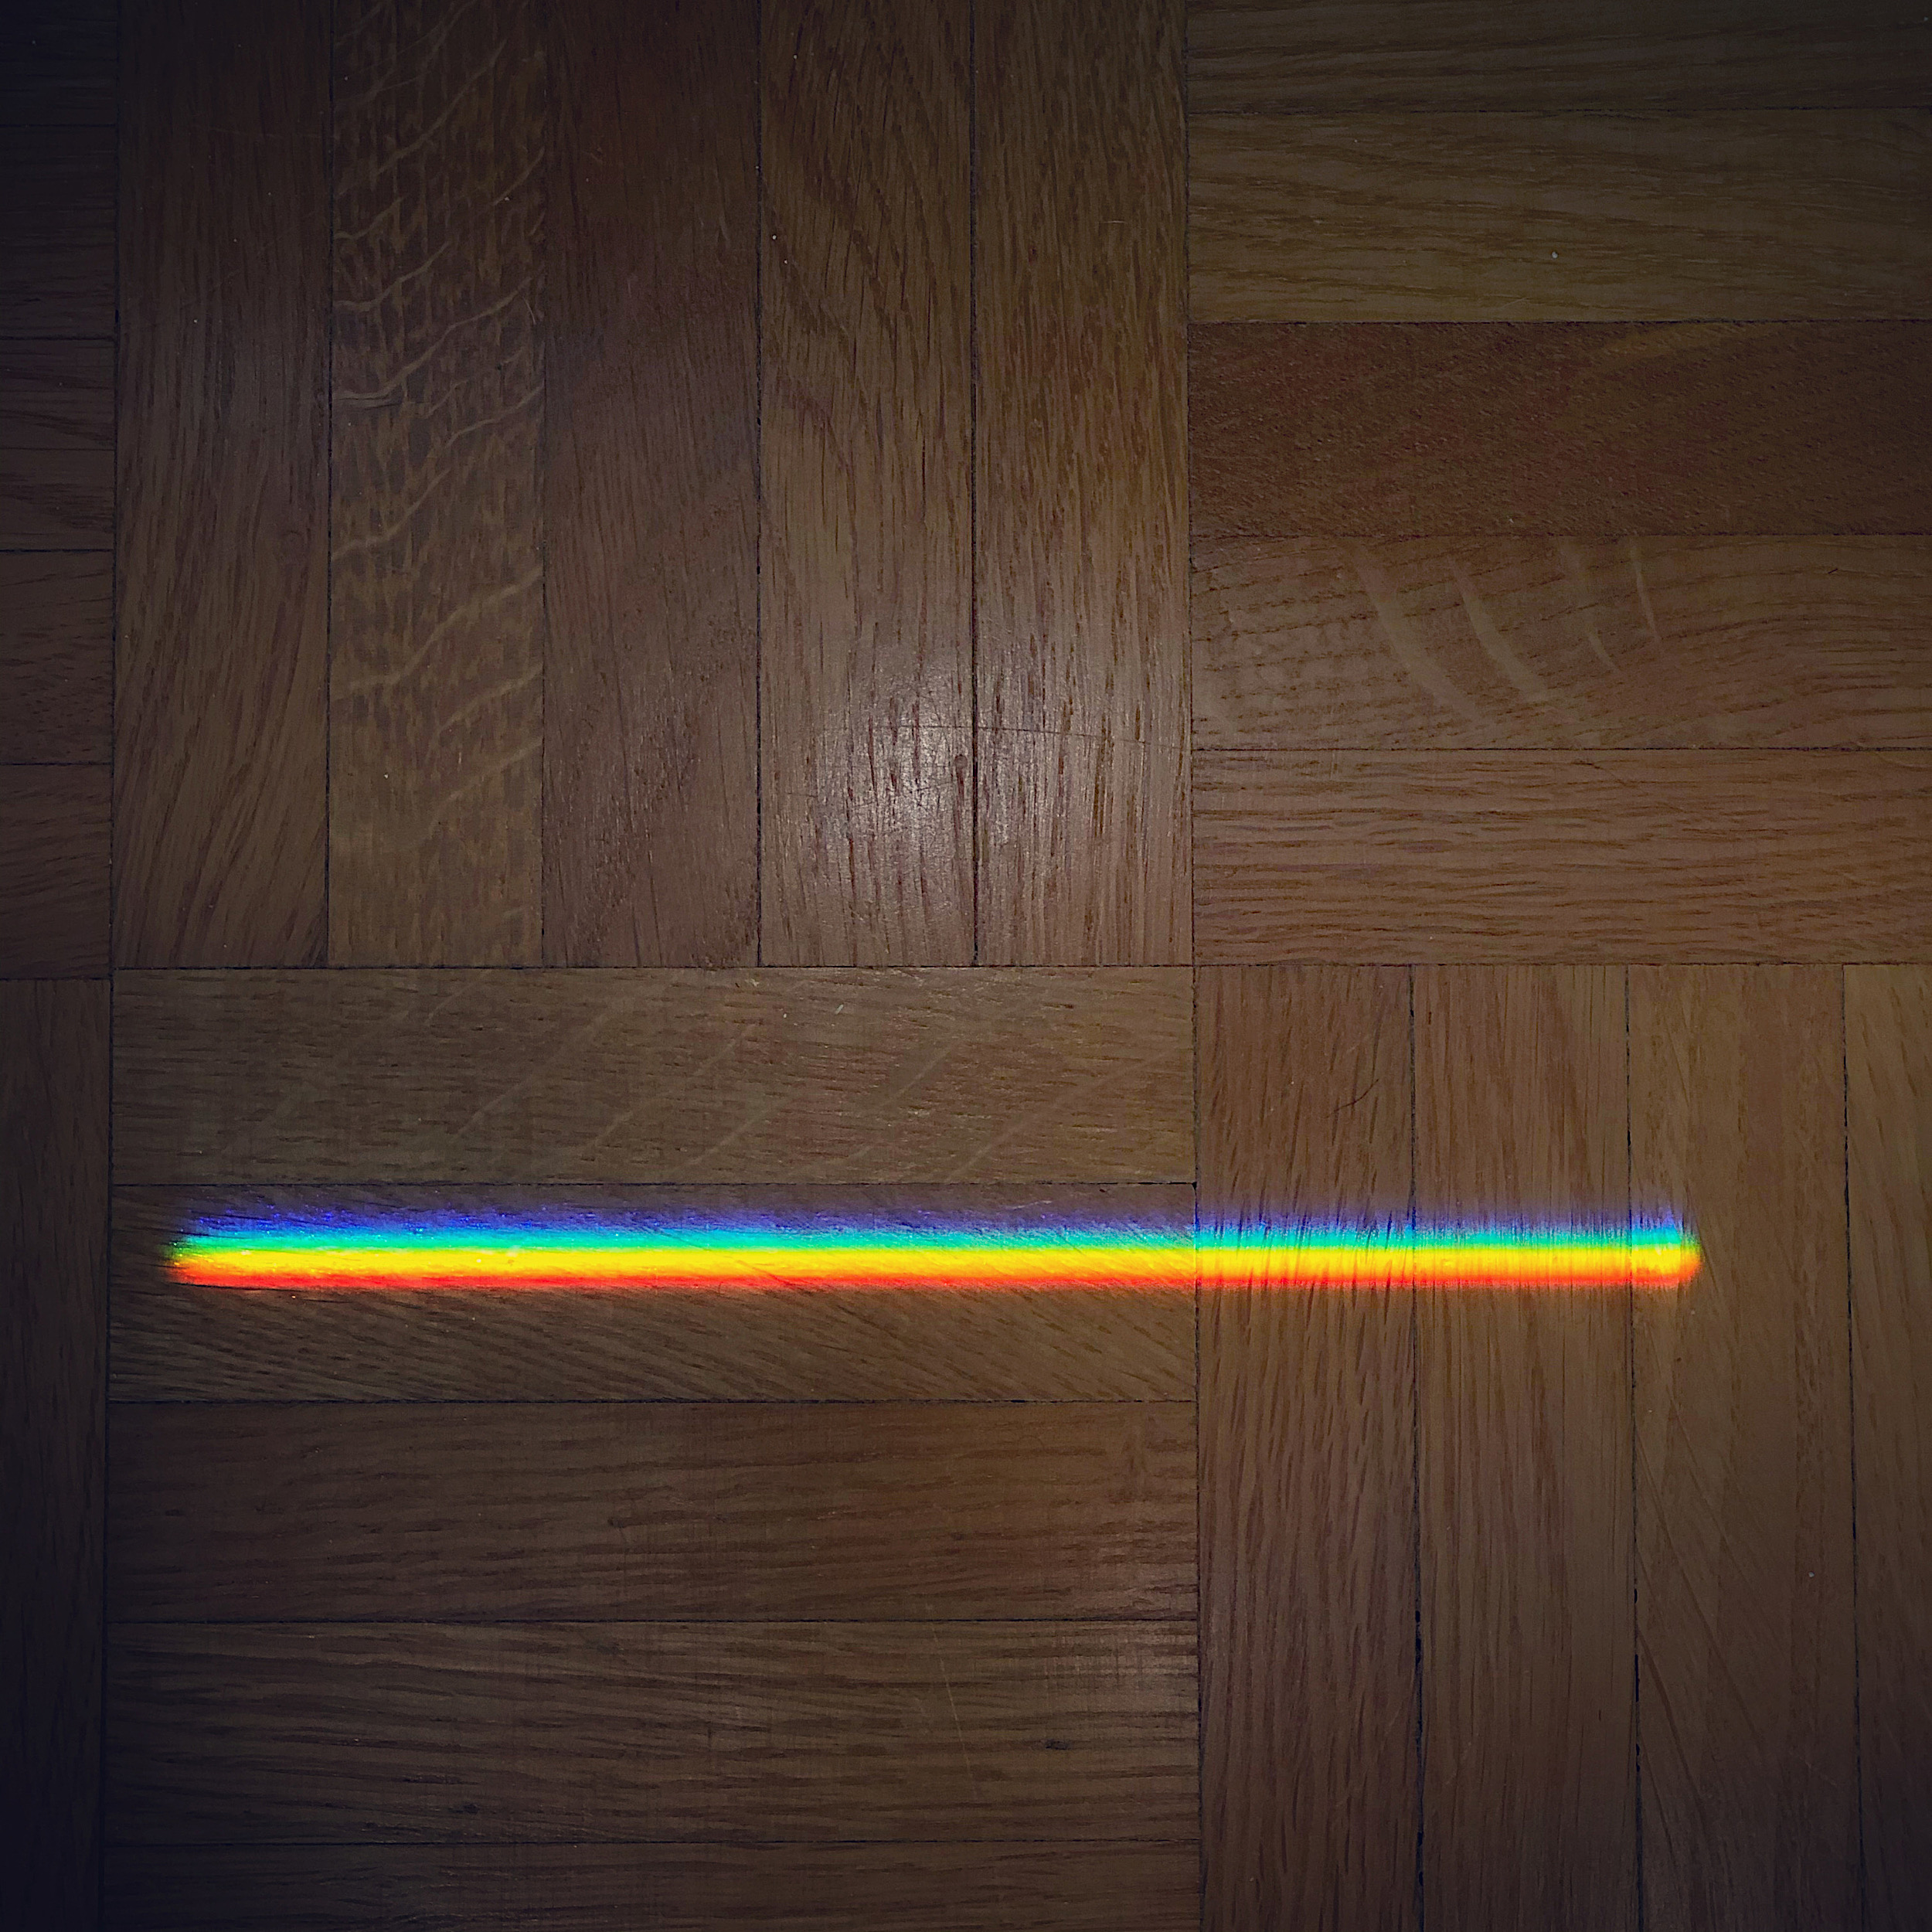 The straight rainbow